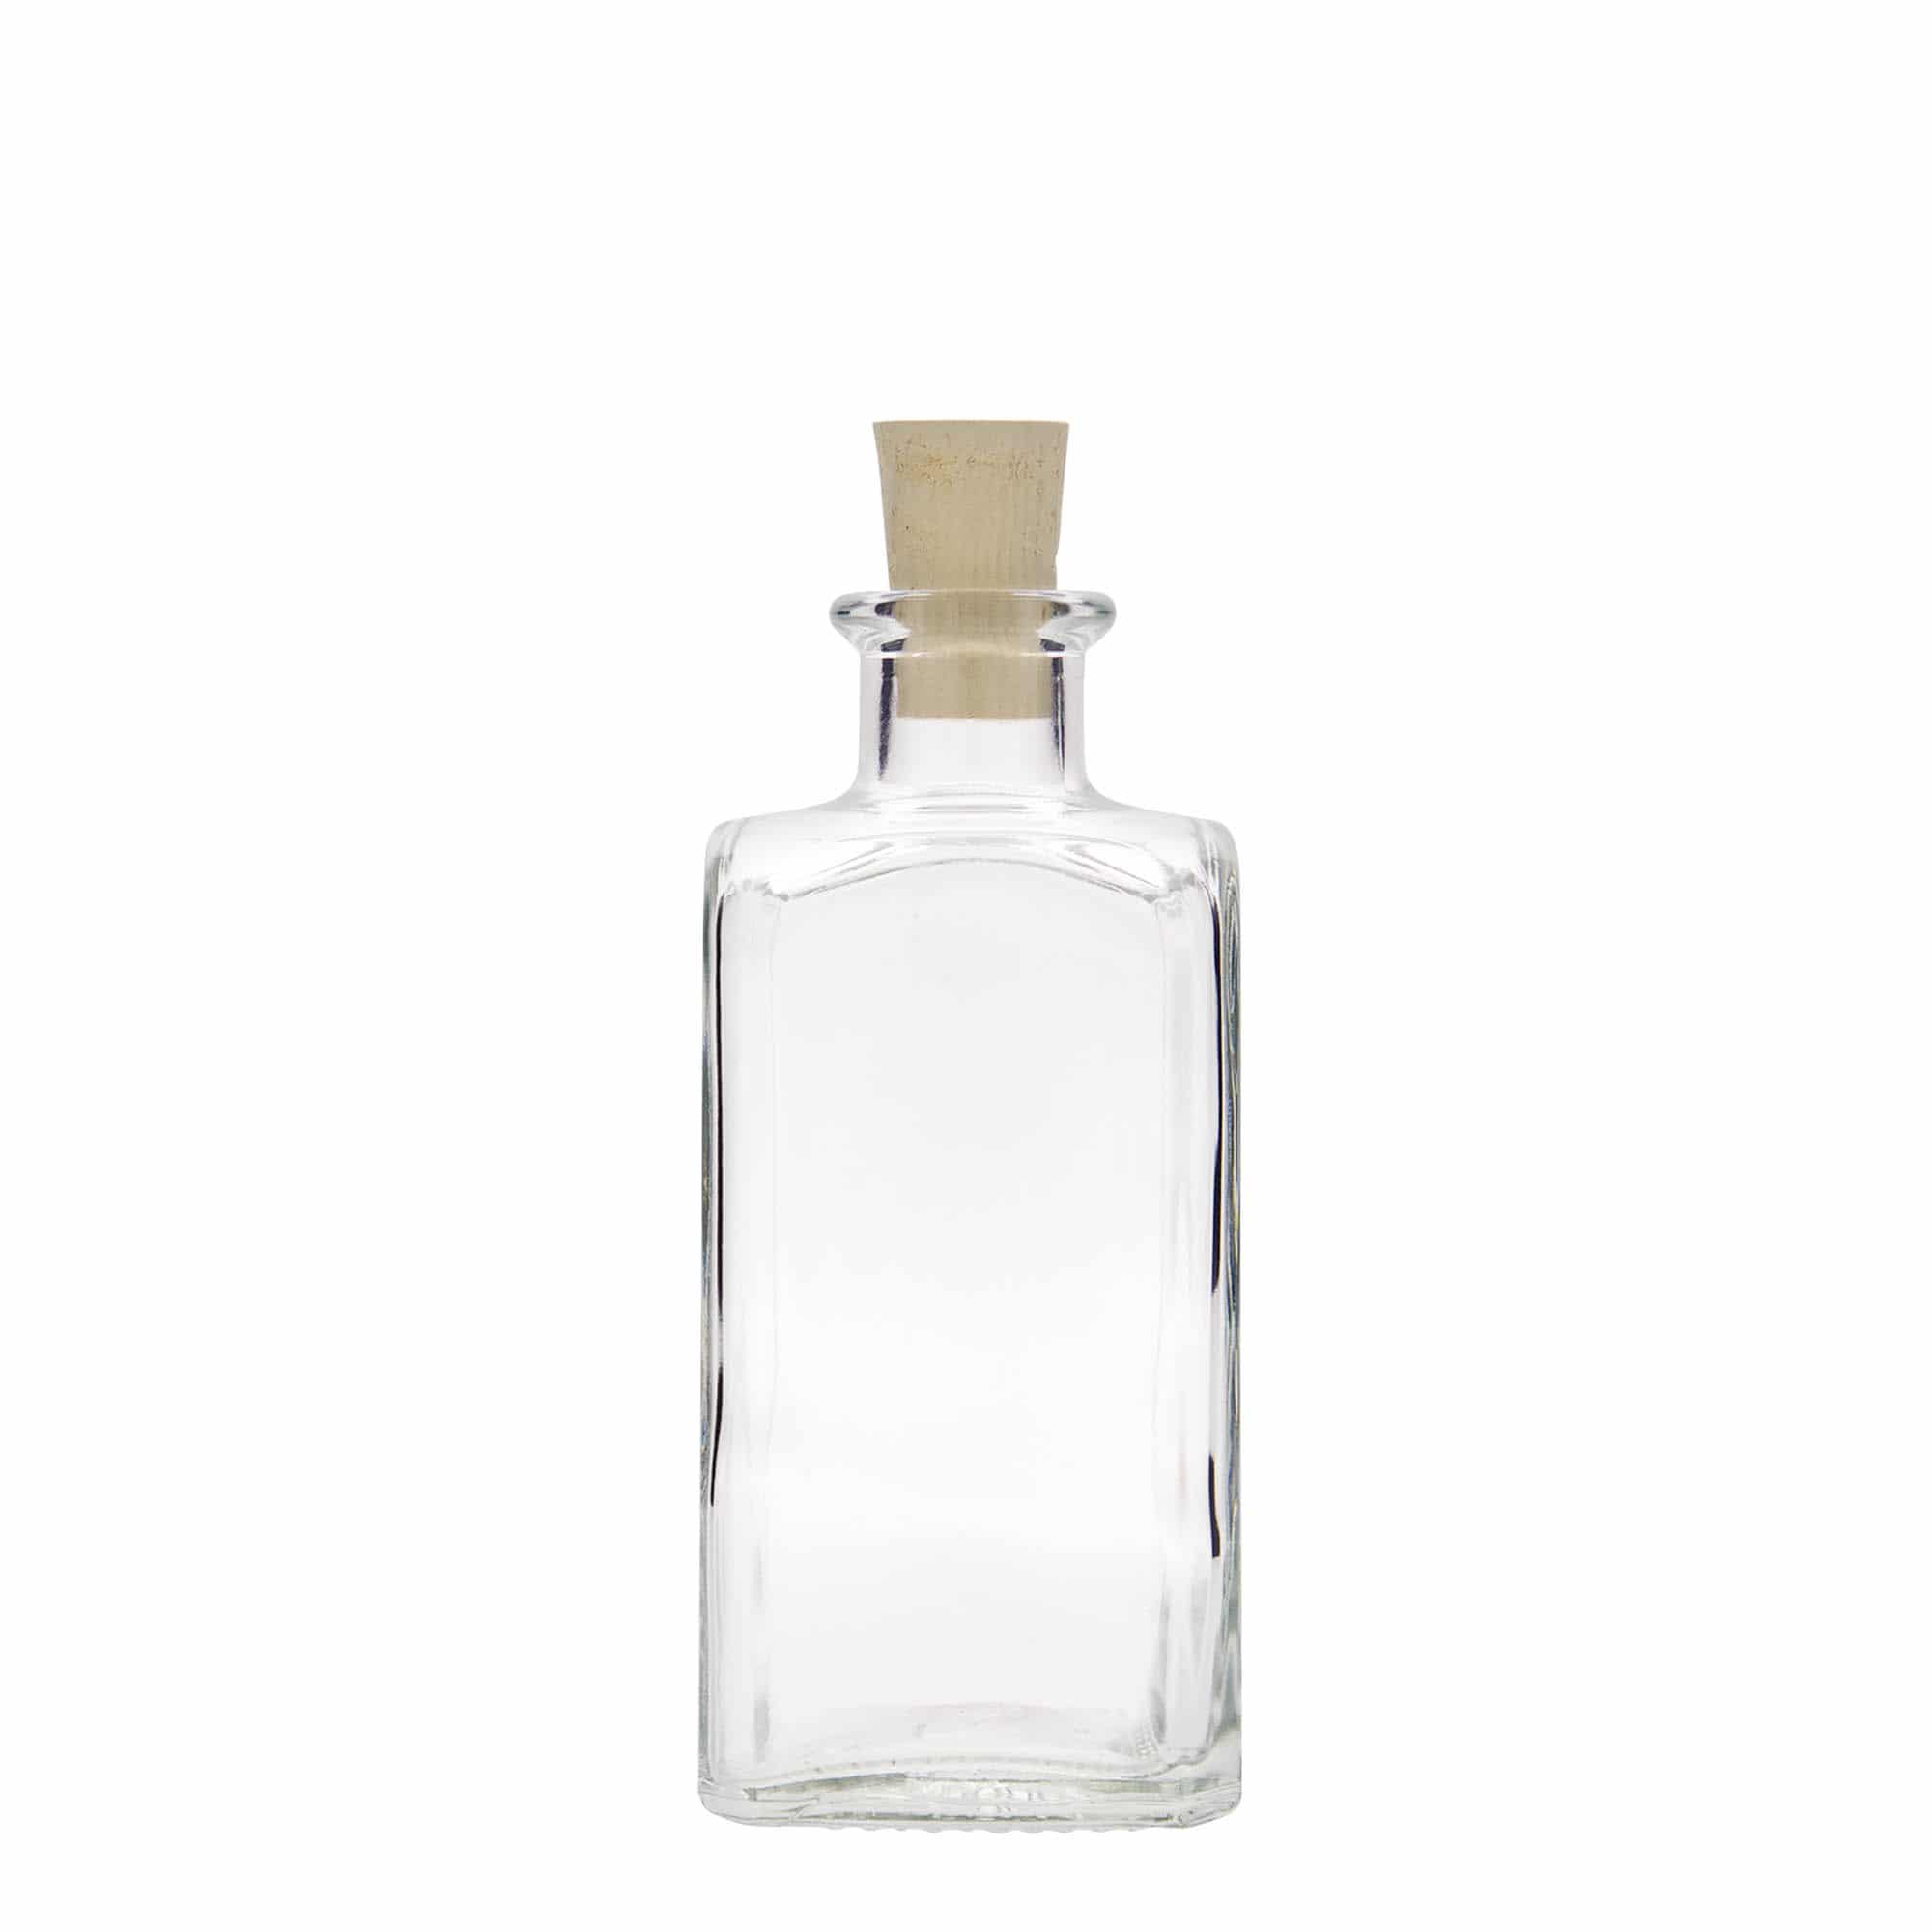 250 ml glass apothecary bottle Carré, square, closure: cork